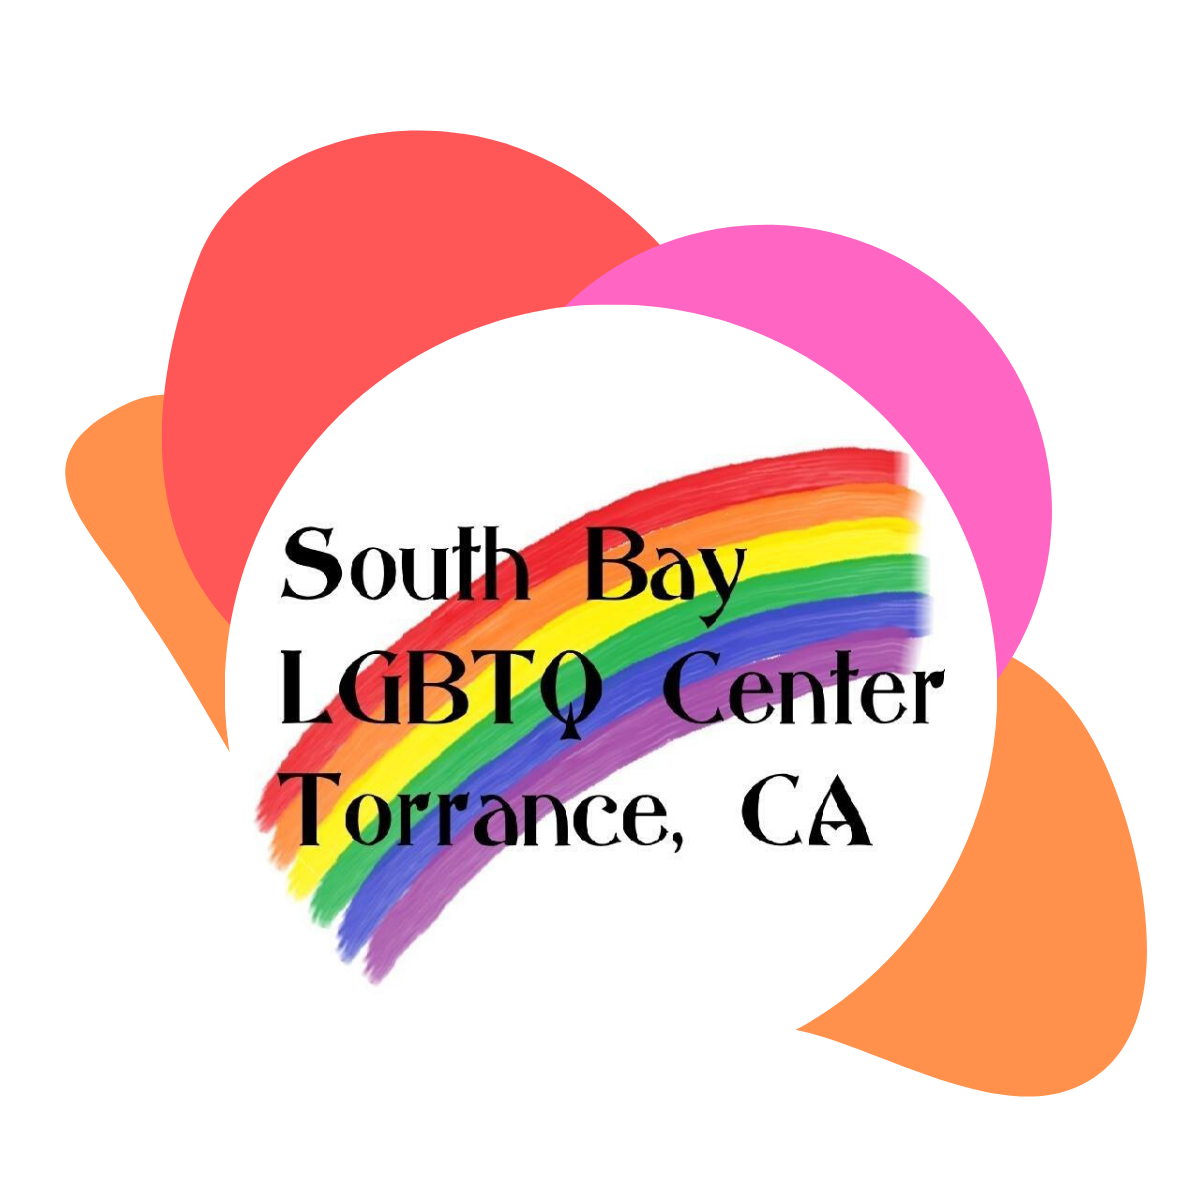 LGBTQ Organization in San Francisco California - South Bay LGBTQ Center